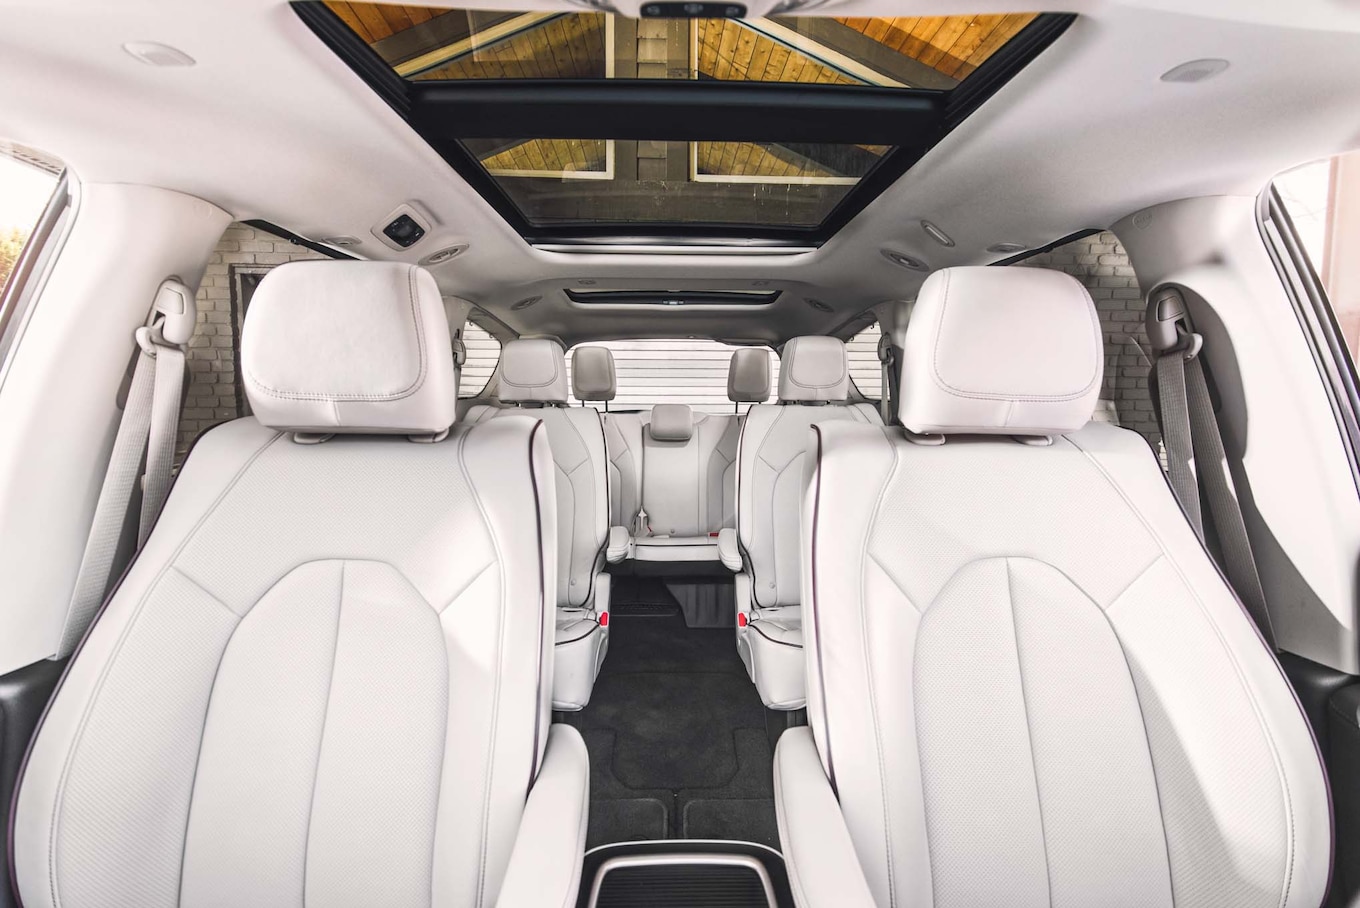 2017-Chrysler-Pacifica-rear-interior-seats.jpg